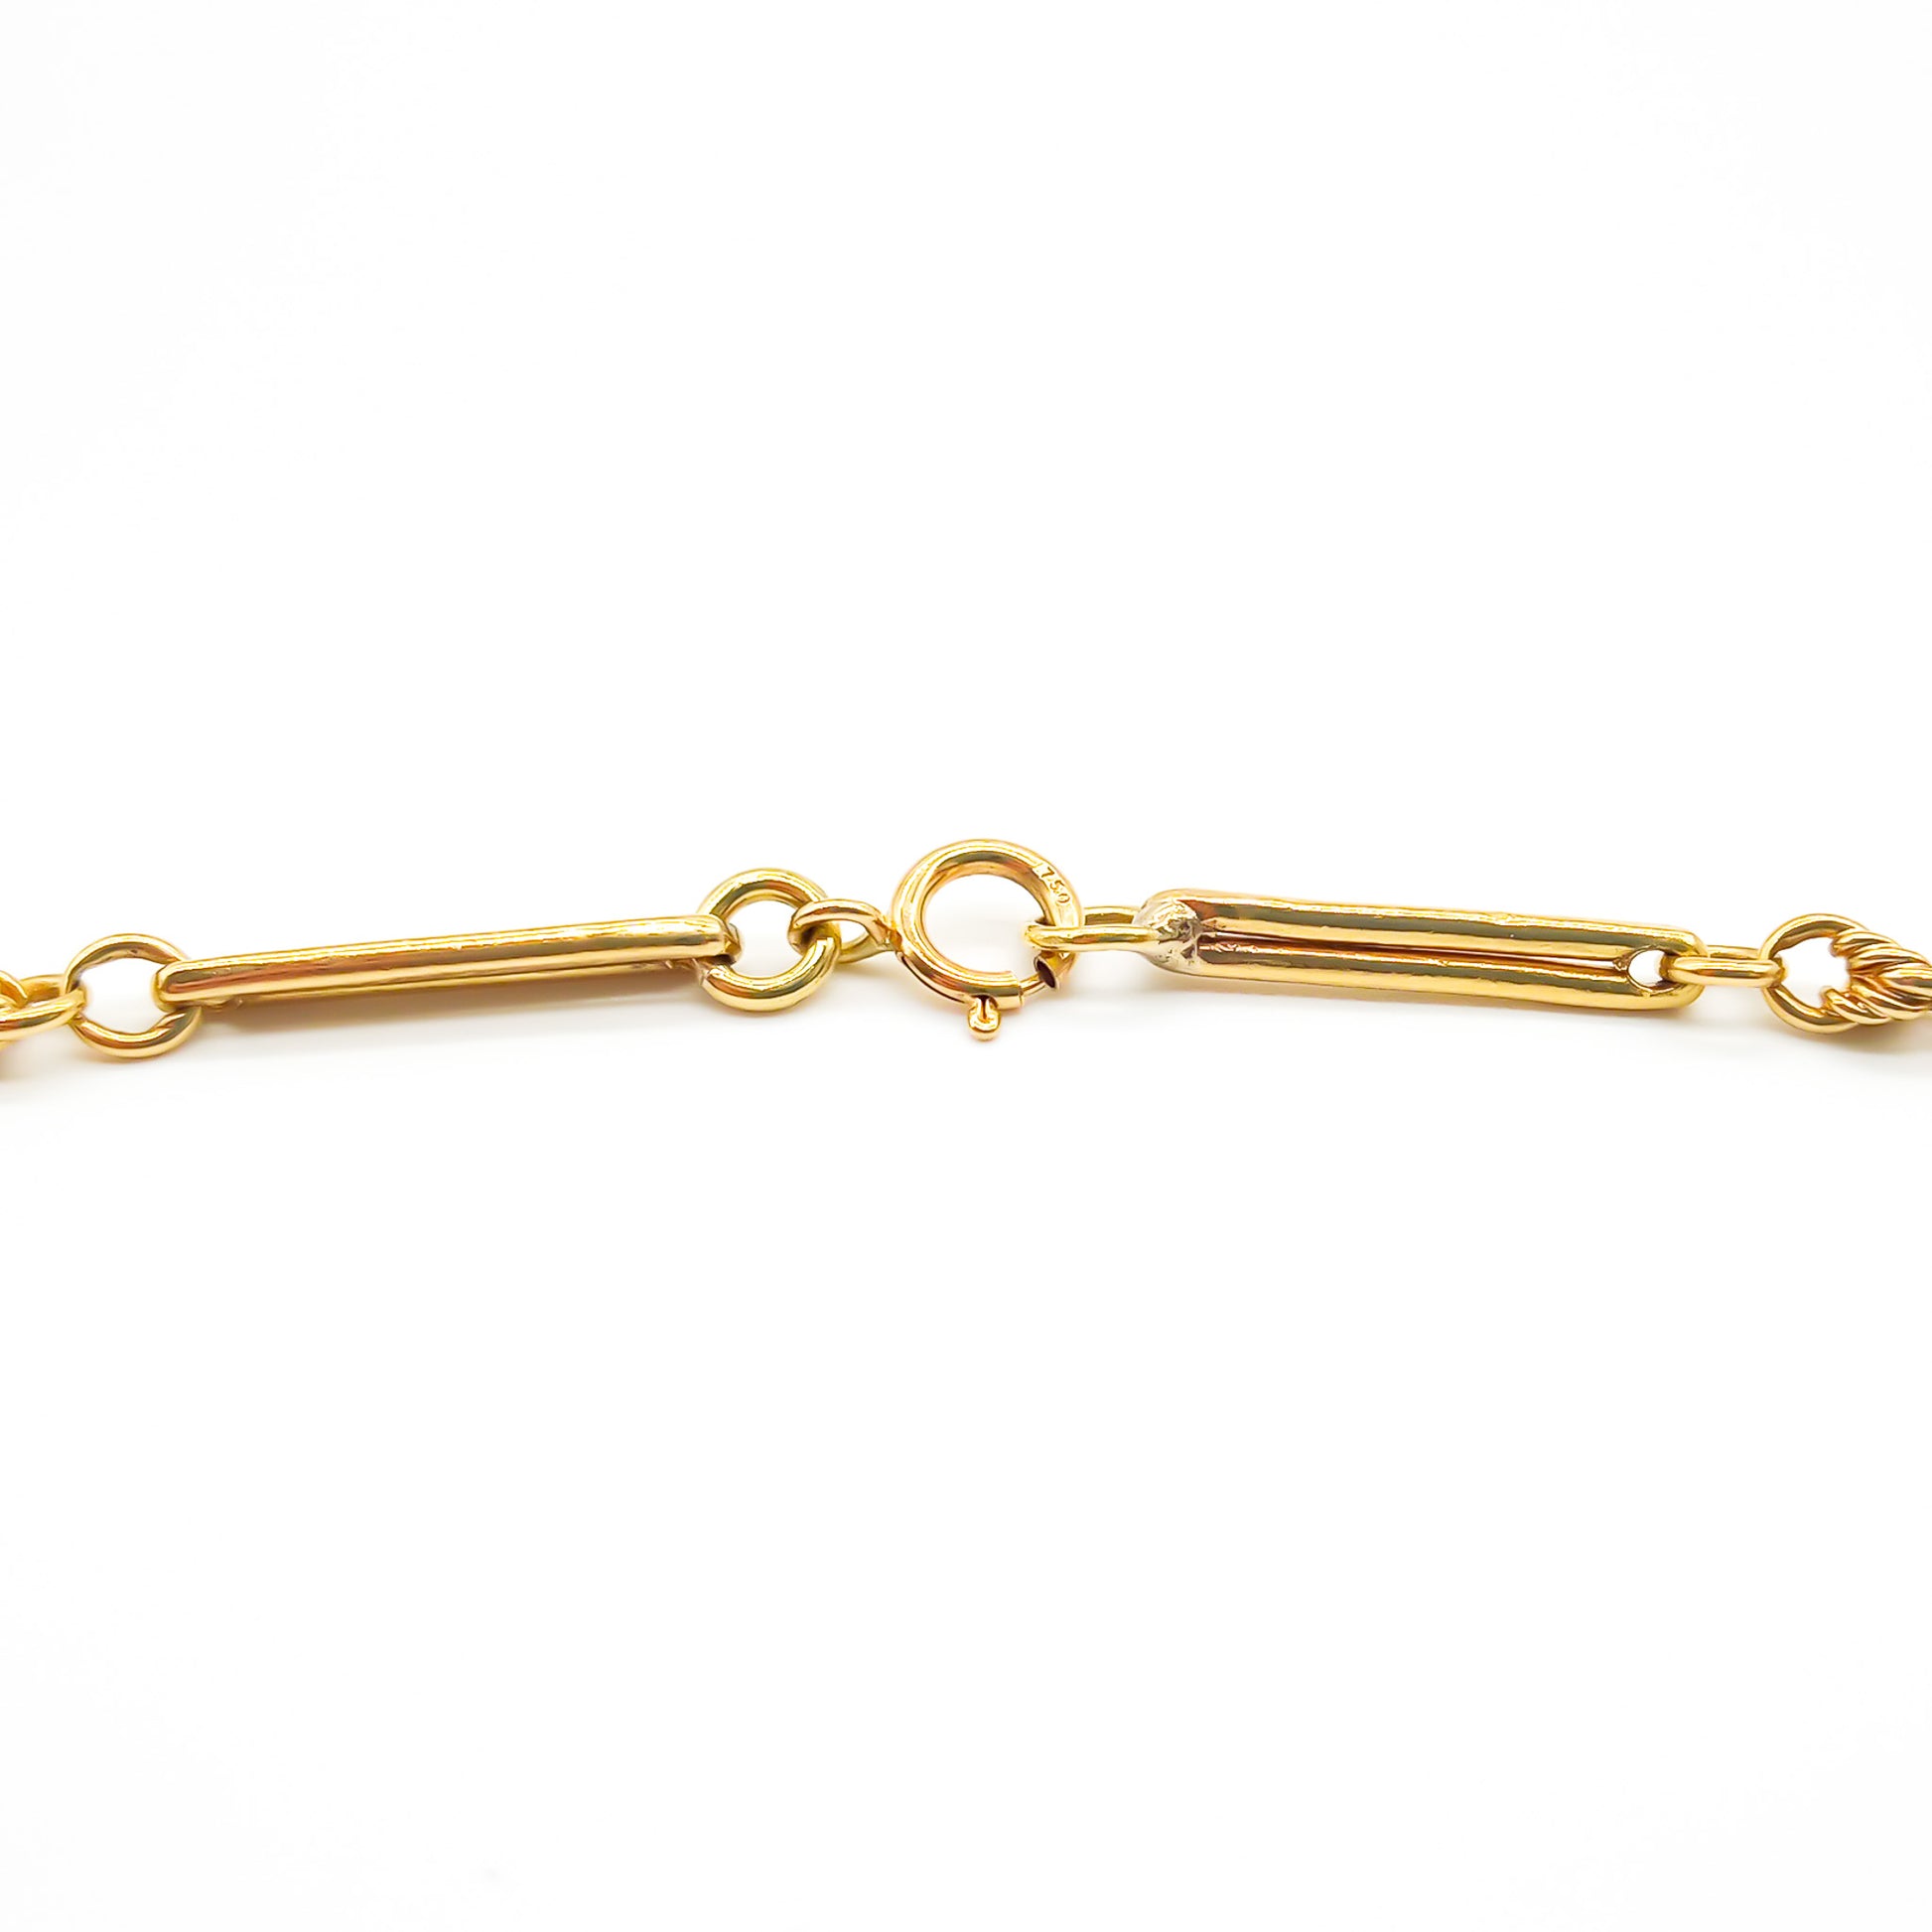 Stylish 18ct yellow gold fancy link chain. Circa 1930’s